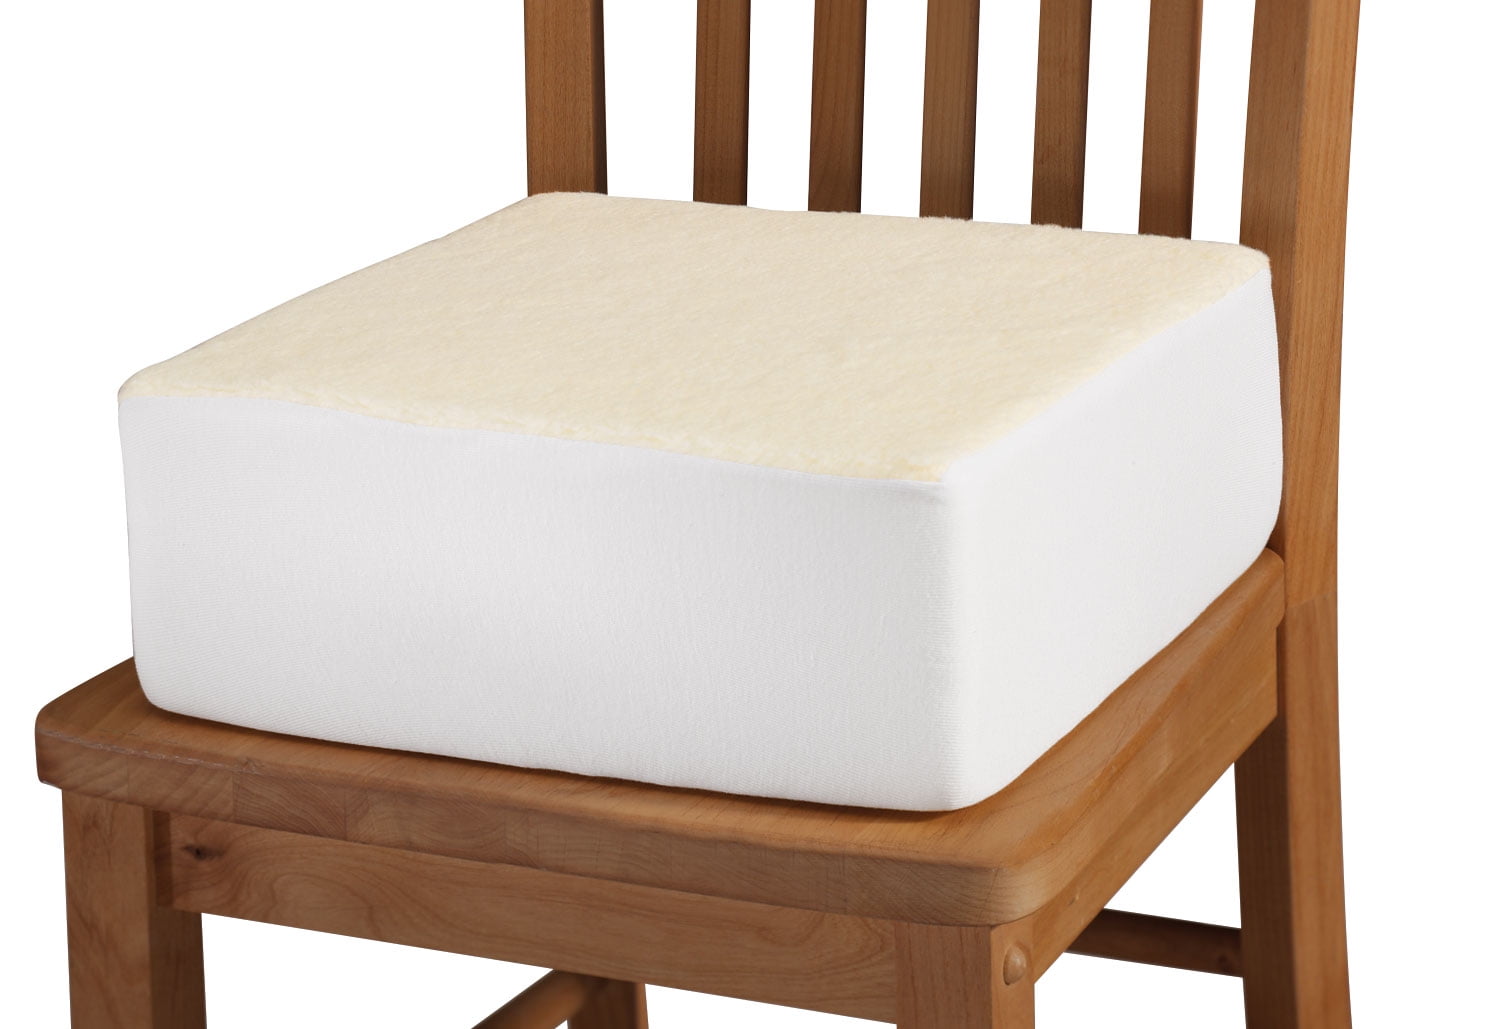 Extra Thick Foam Cushion - Walmart.com